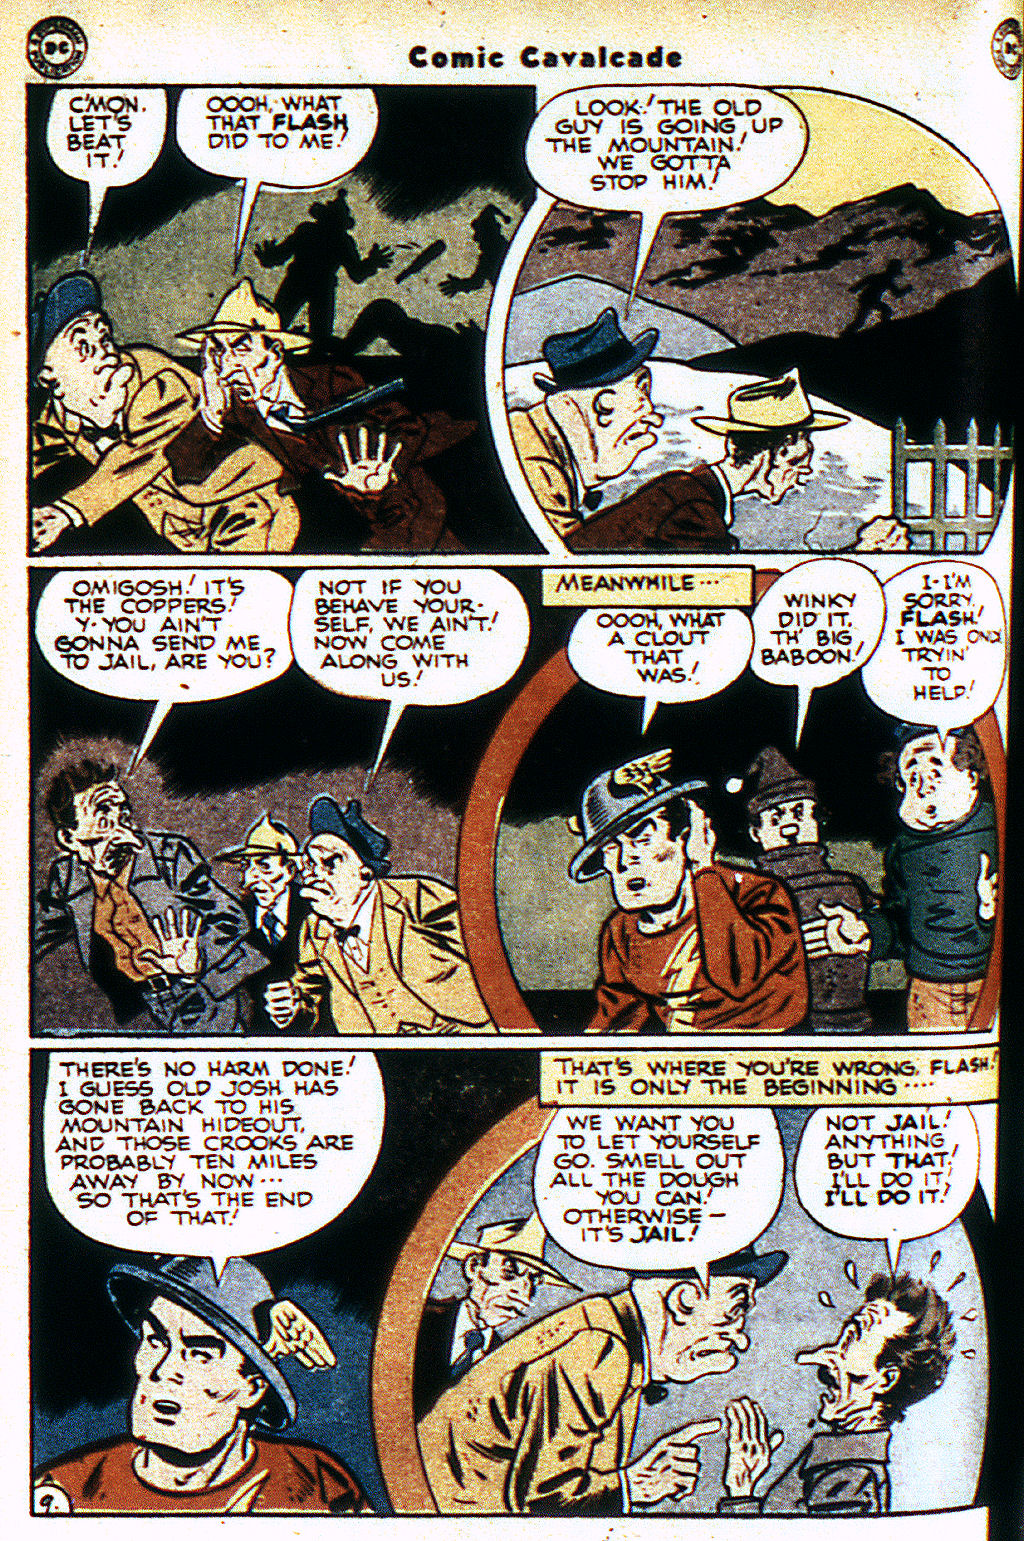 Comic Cavalcade issue 18 - Page 27